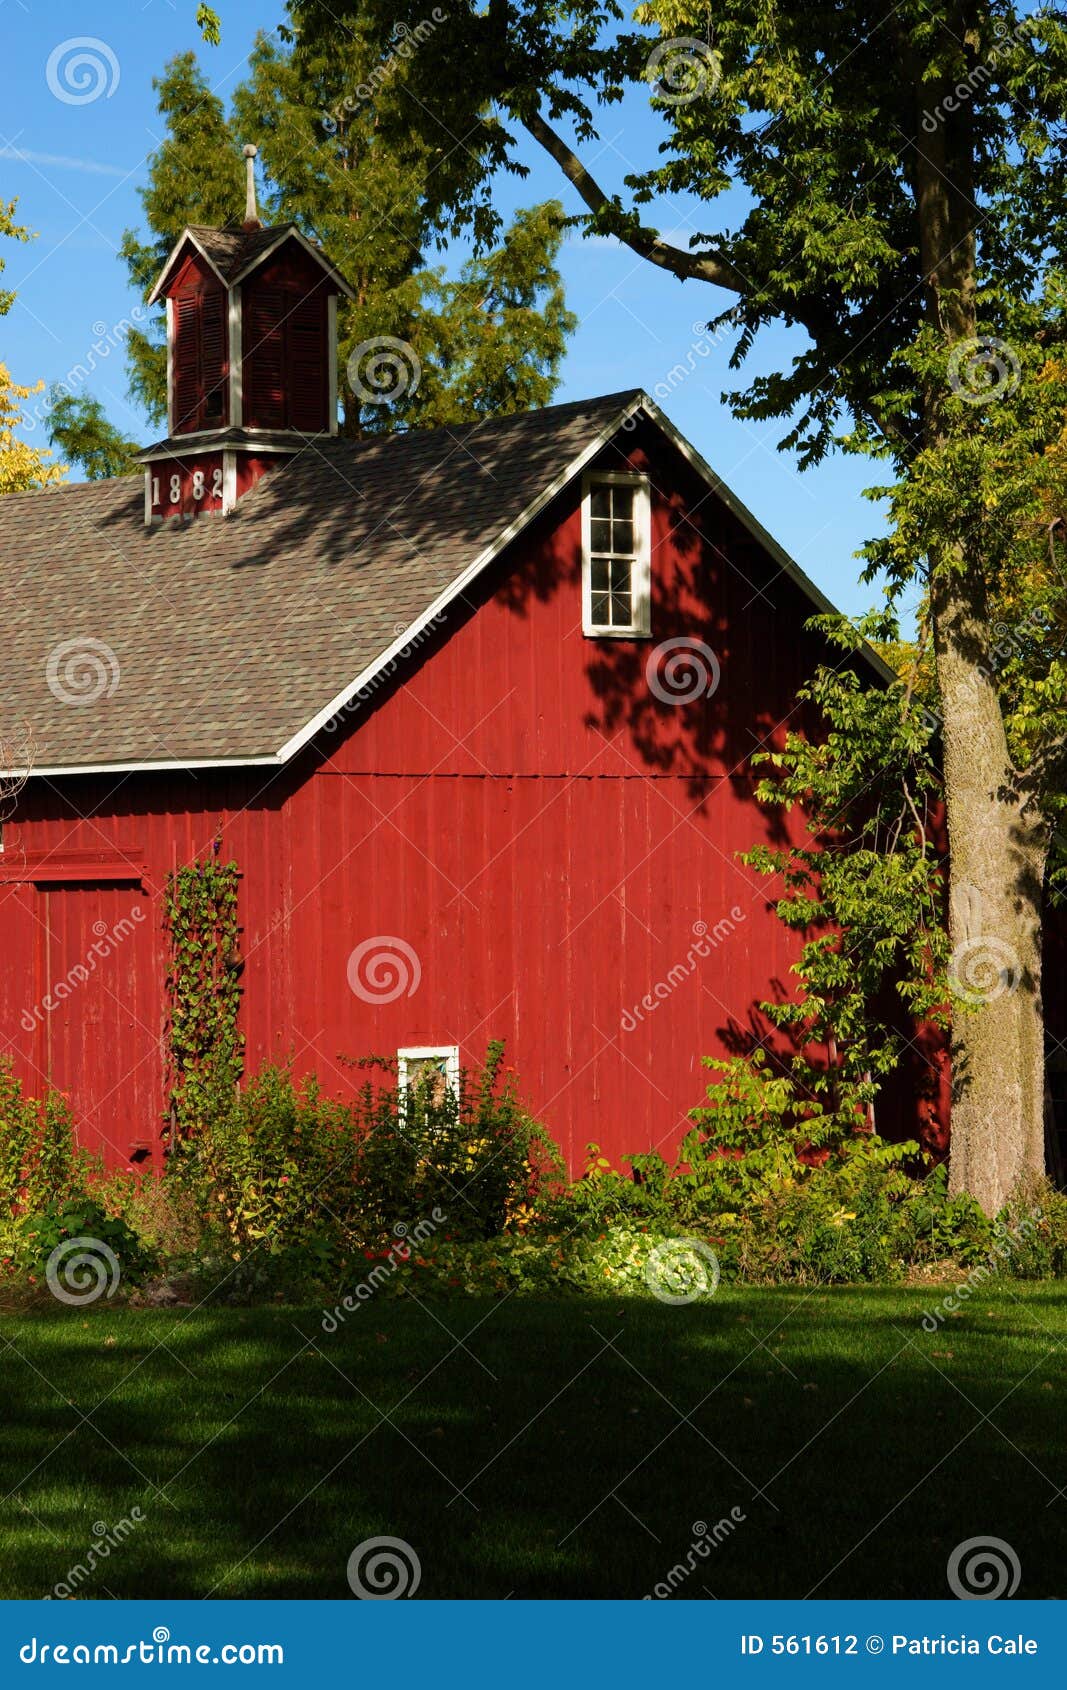 historic barn